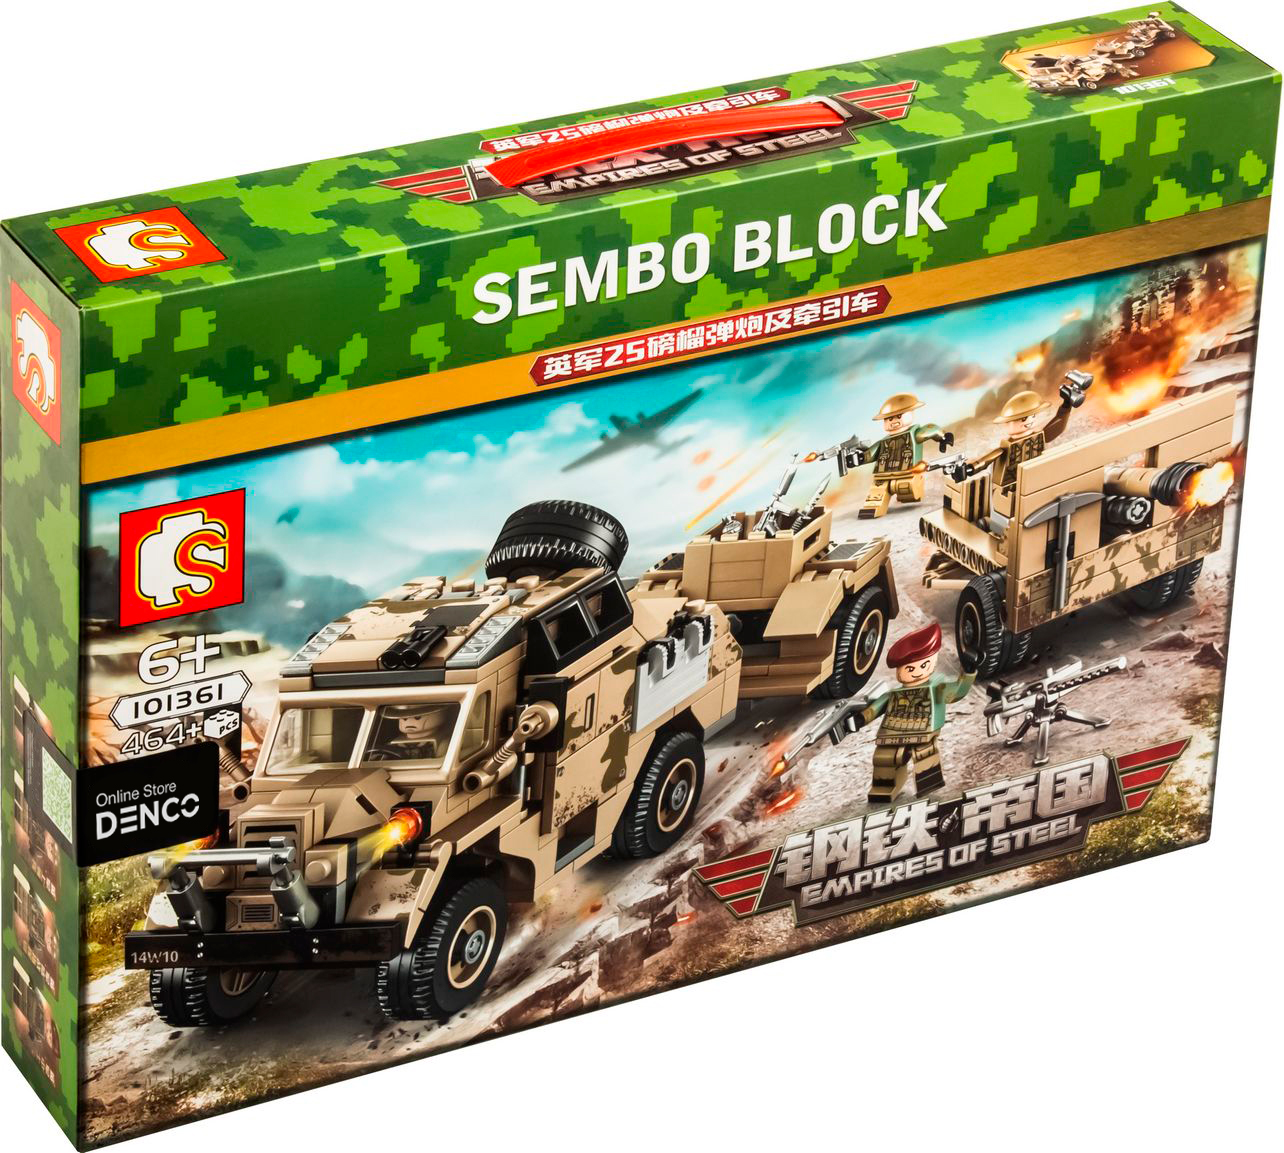 Конструктор Sembo Block «Артиллерийский тягач и 25-фунтовая пушка-гаубица» 101361 Empires of Steel / 464 детали